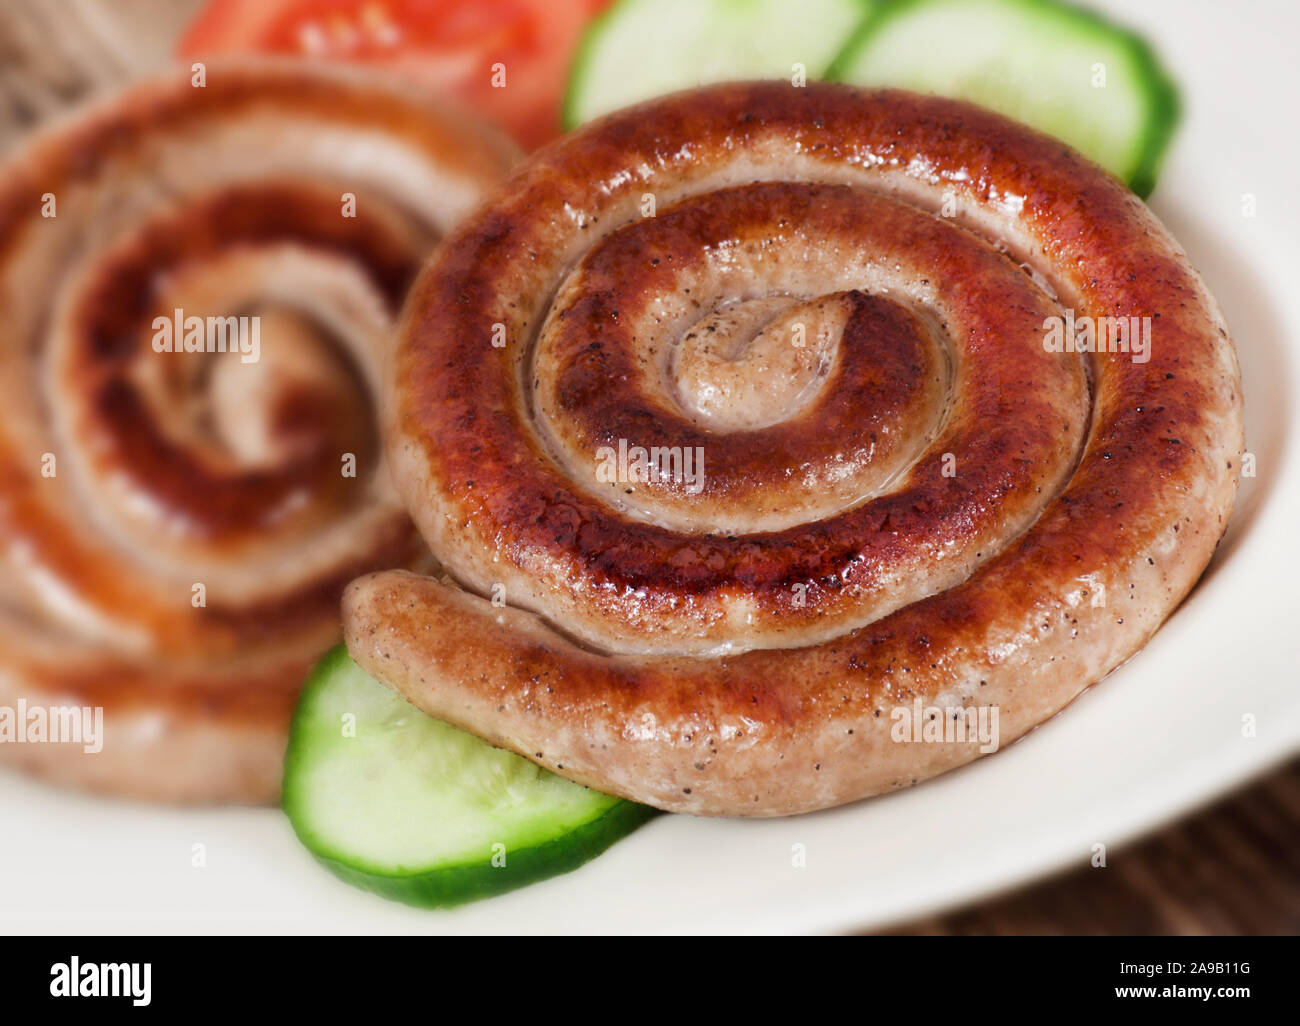 Fried sausage and salad close up Stock Photo